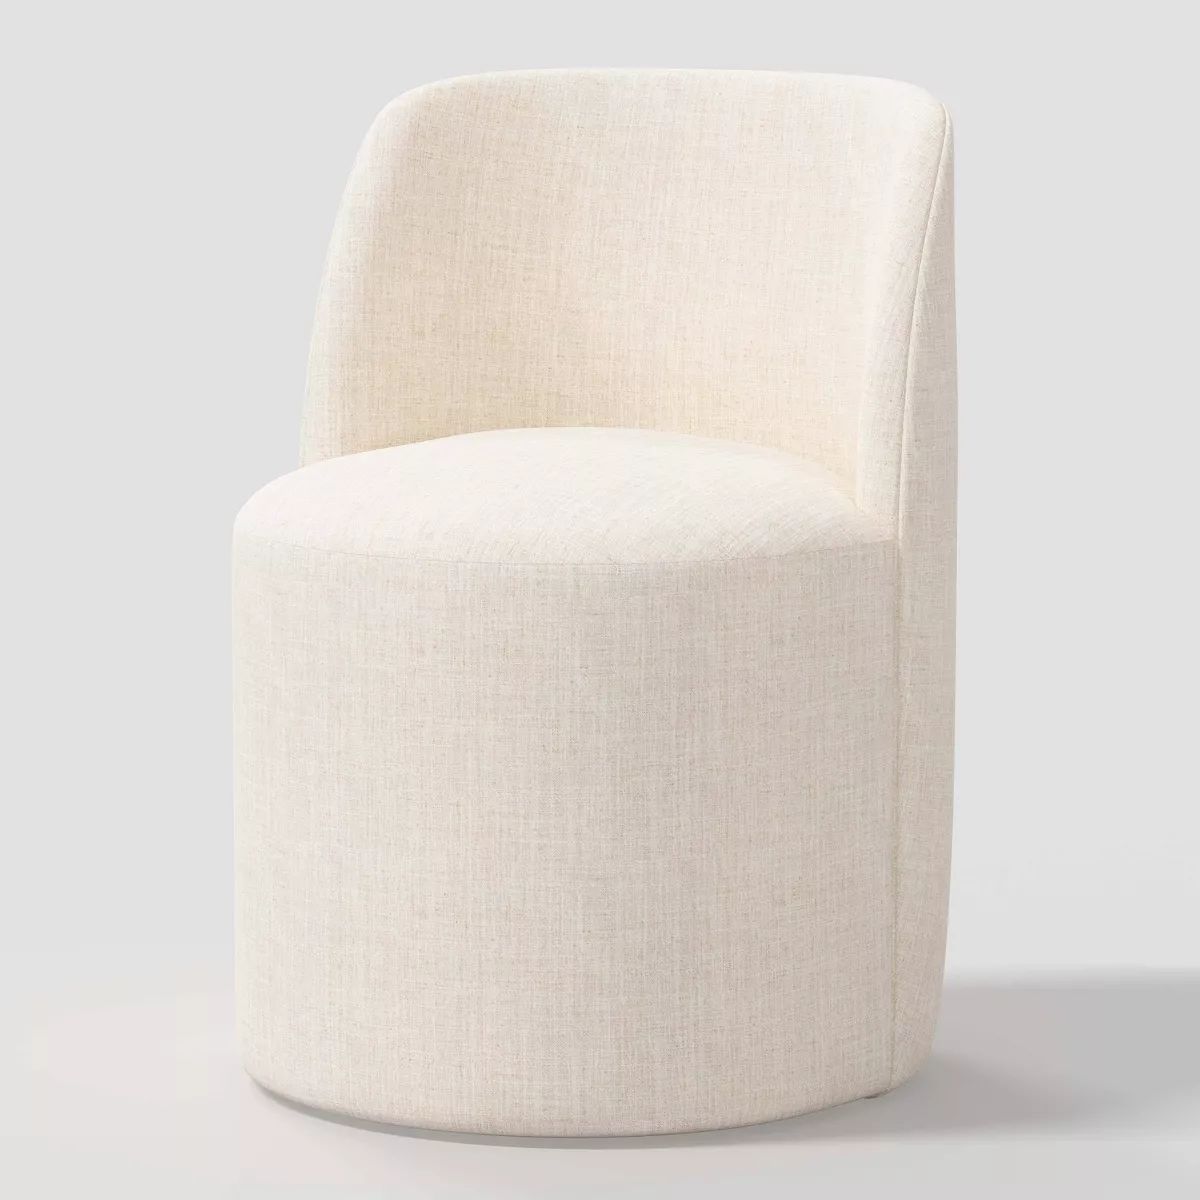 Jessa Dining Chair in Linen - Threshold™ | Target